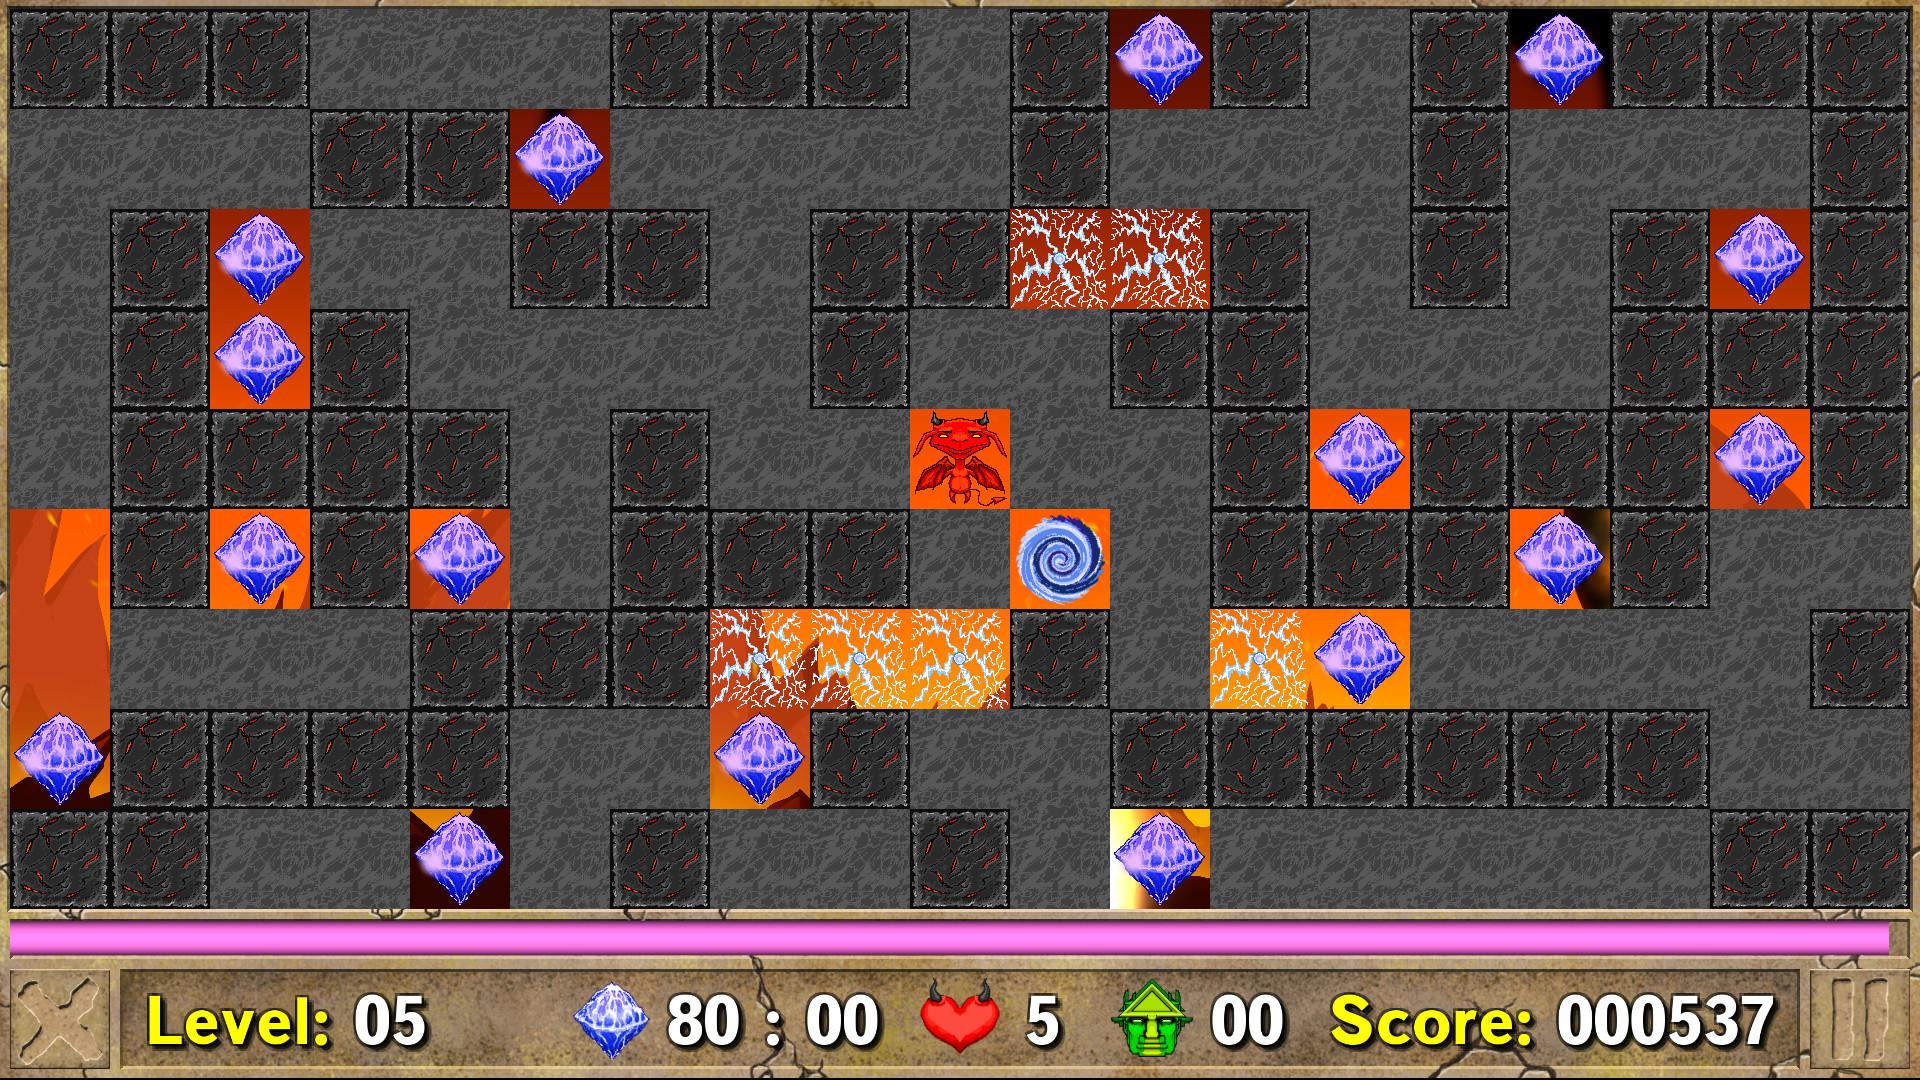 Screenshot №2 from game Elems